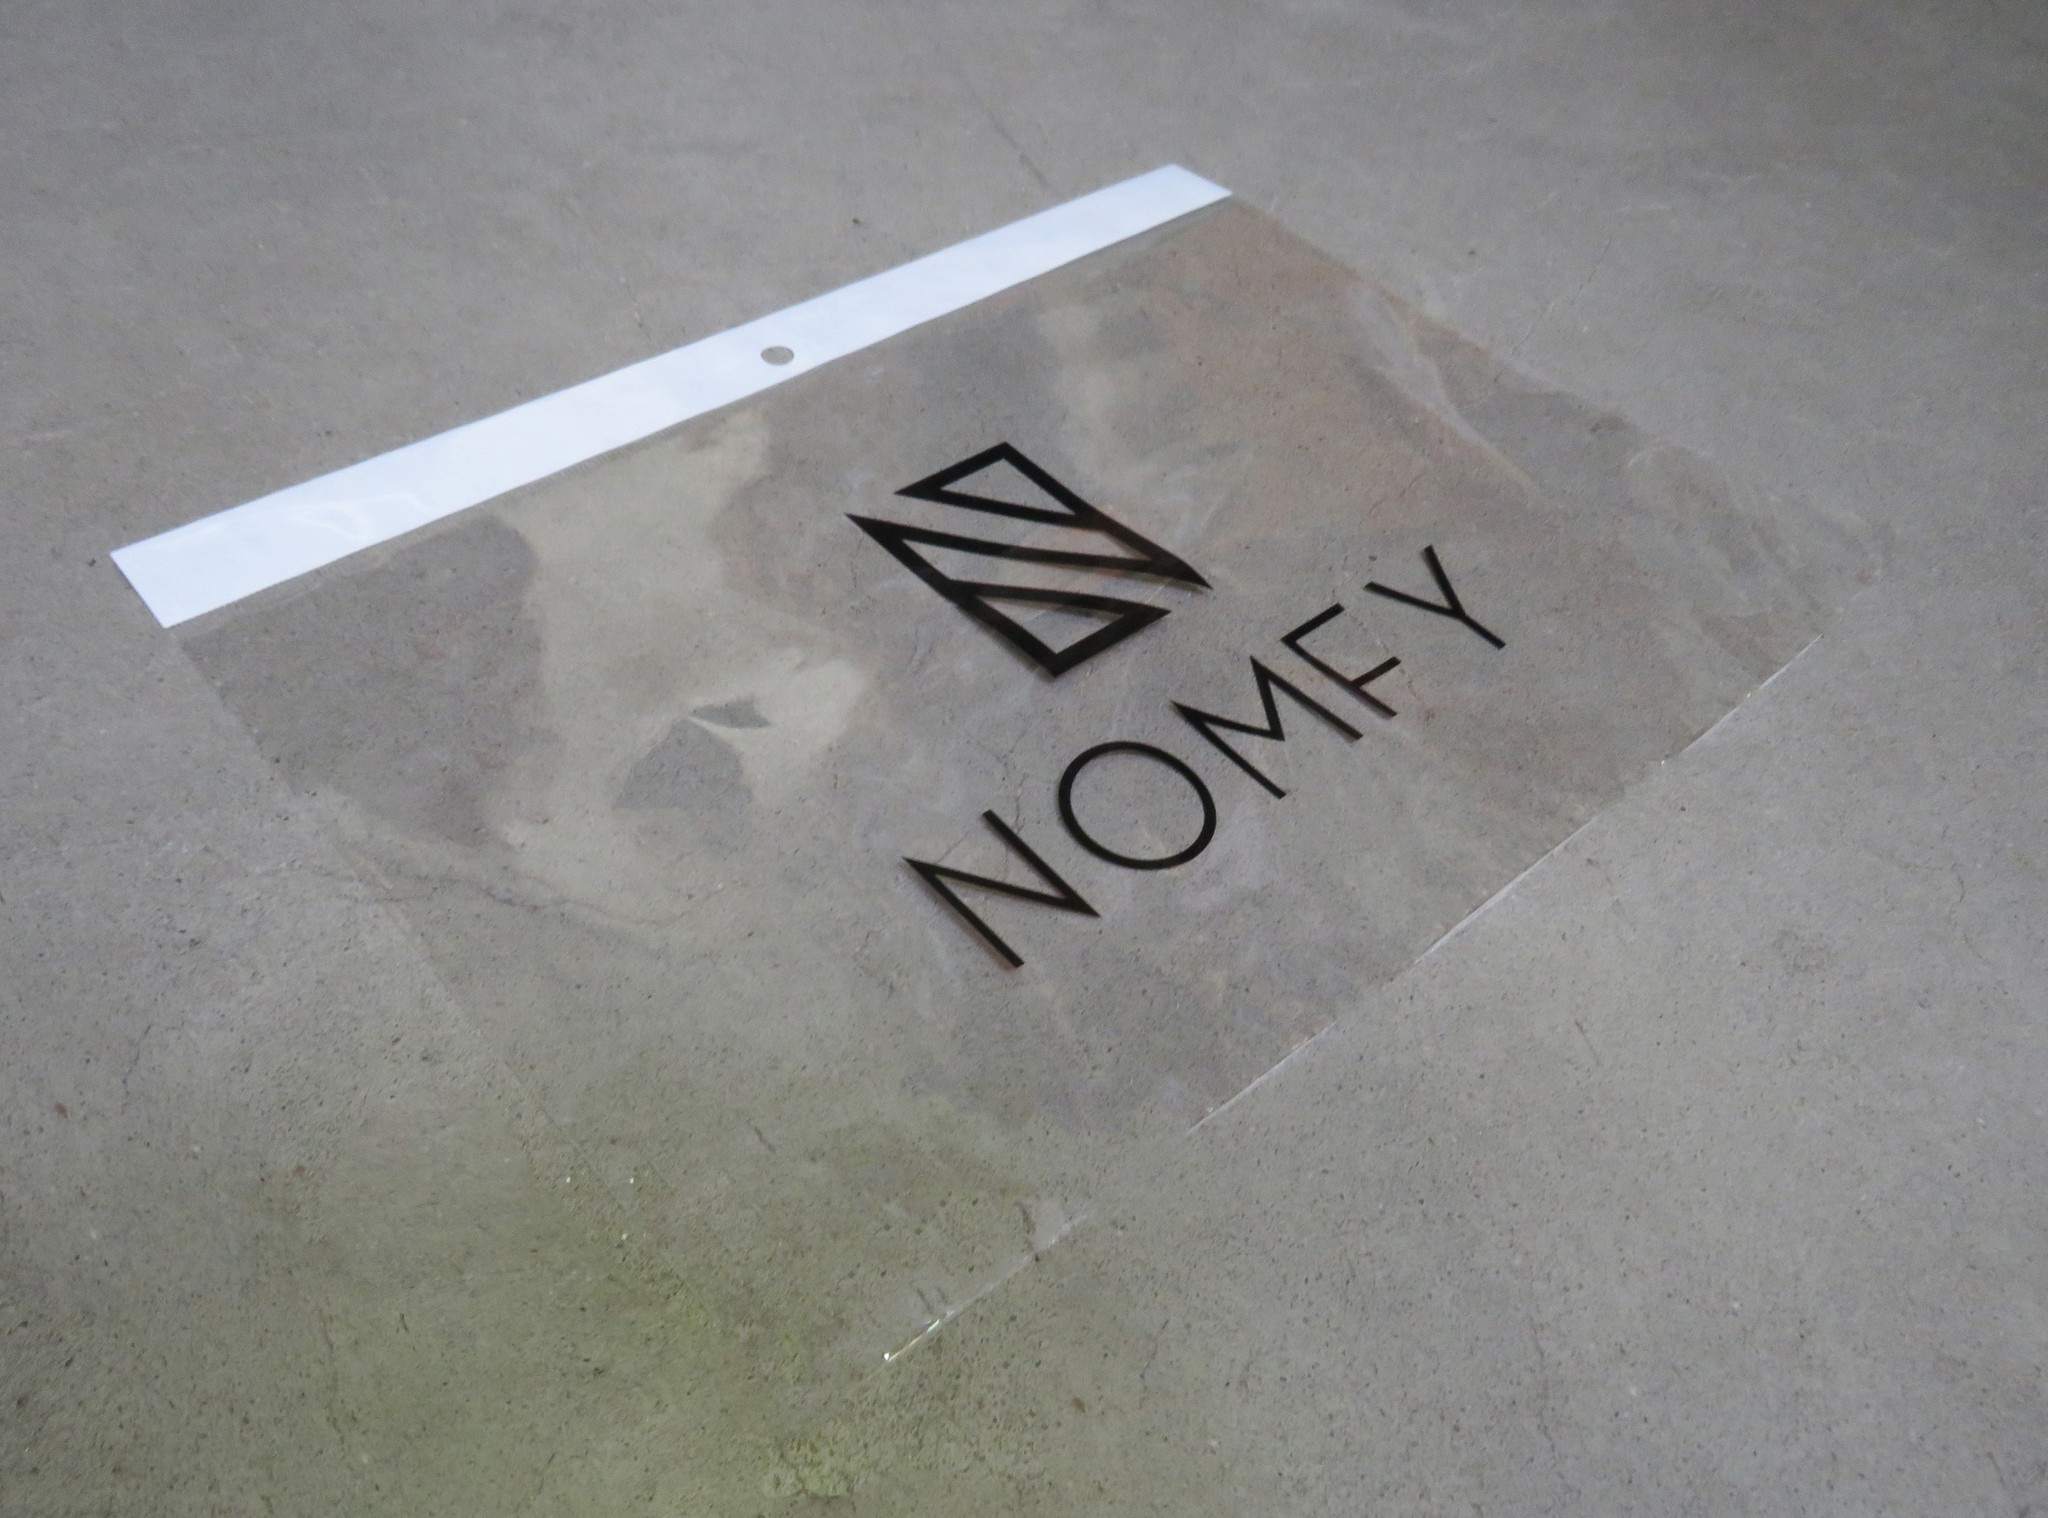 Nomfy Nomfy iPad Pro 11 inch (2020) Kinderhoes Met Screenprotector - Zwart